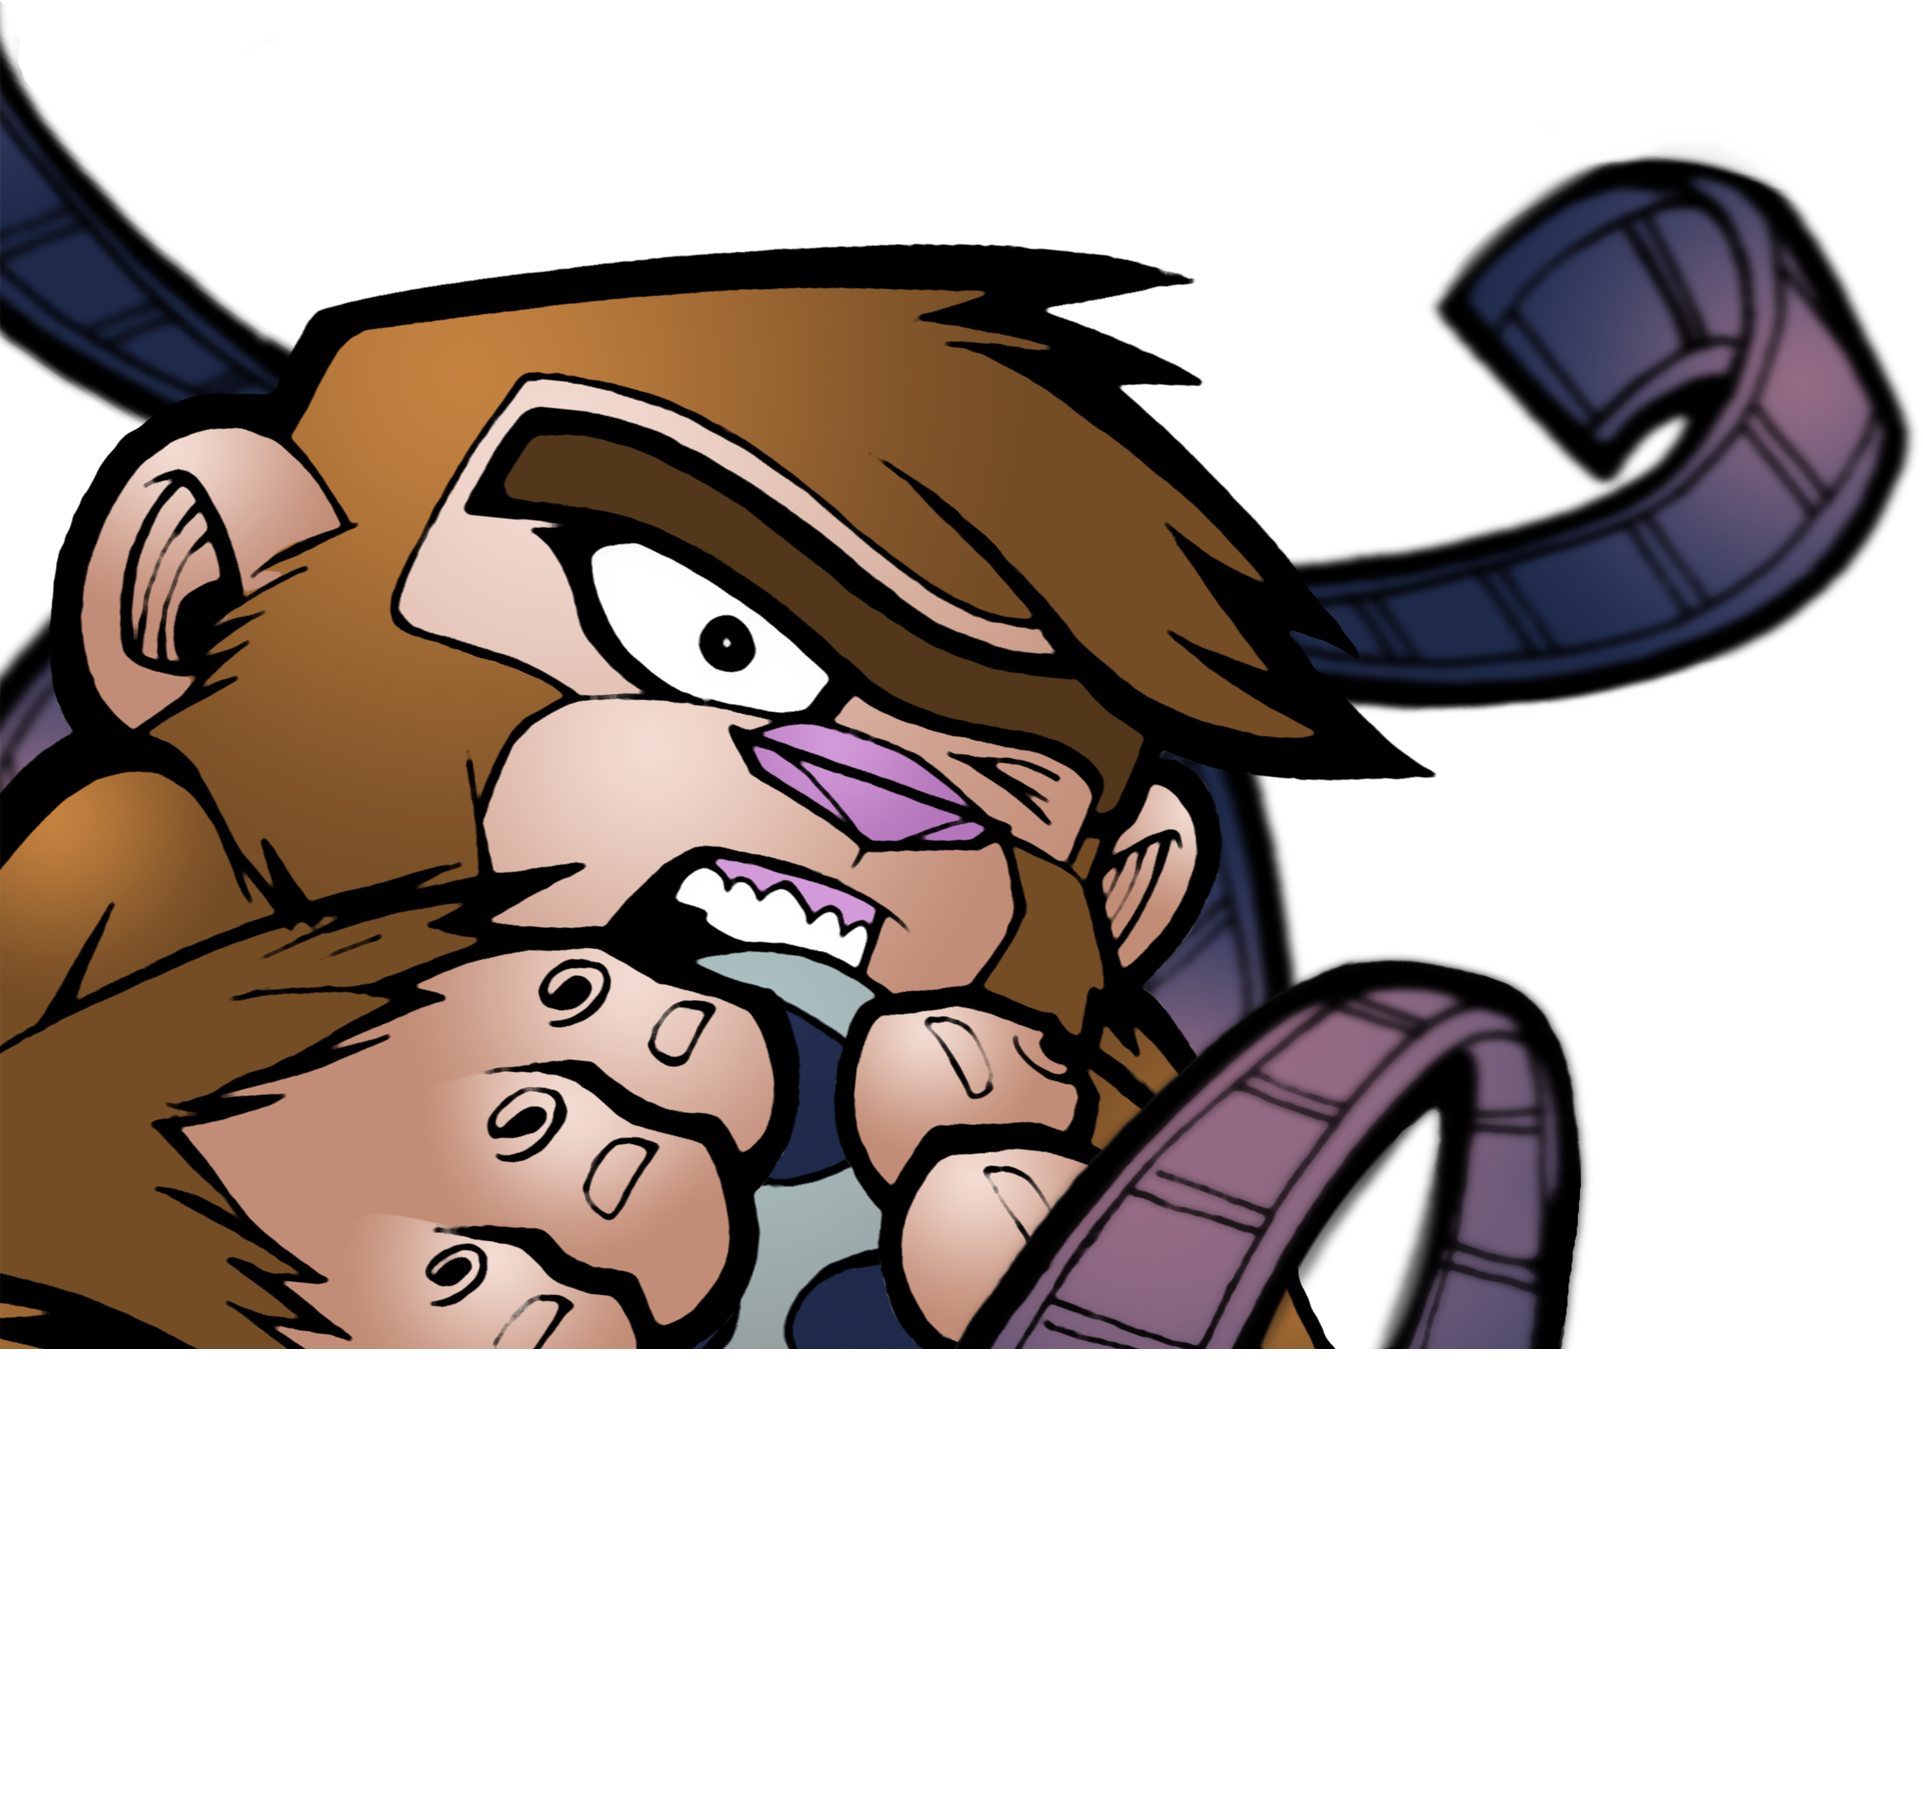 Nick Birtwistle